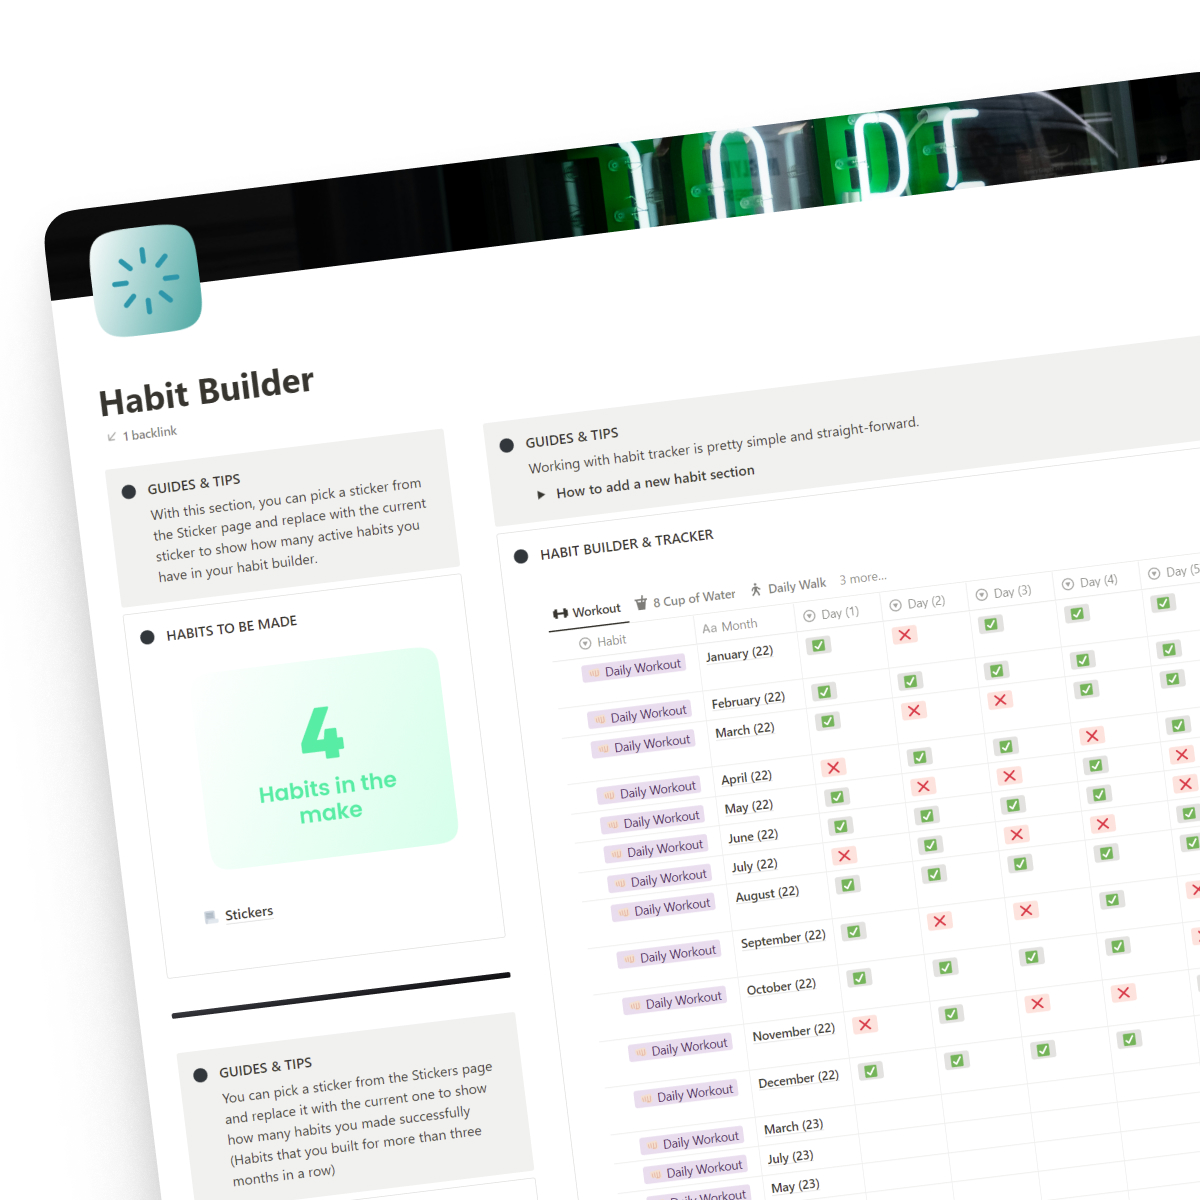 Habit Builder & Tracker